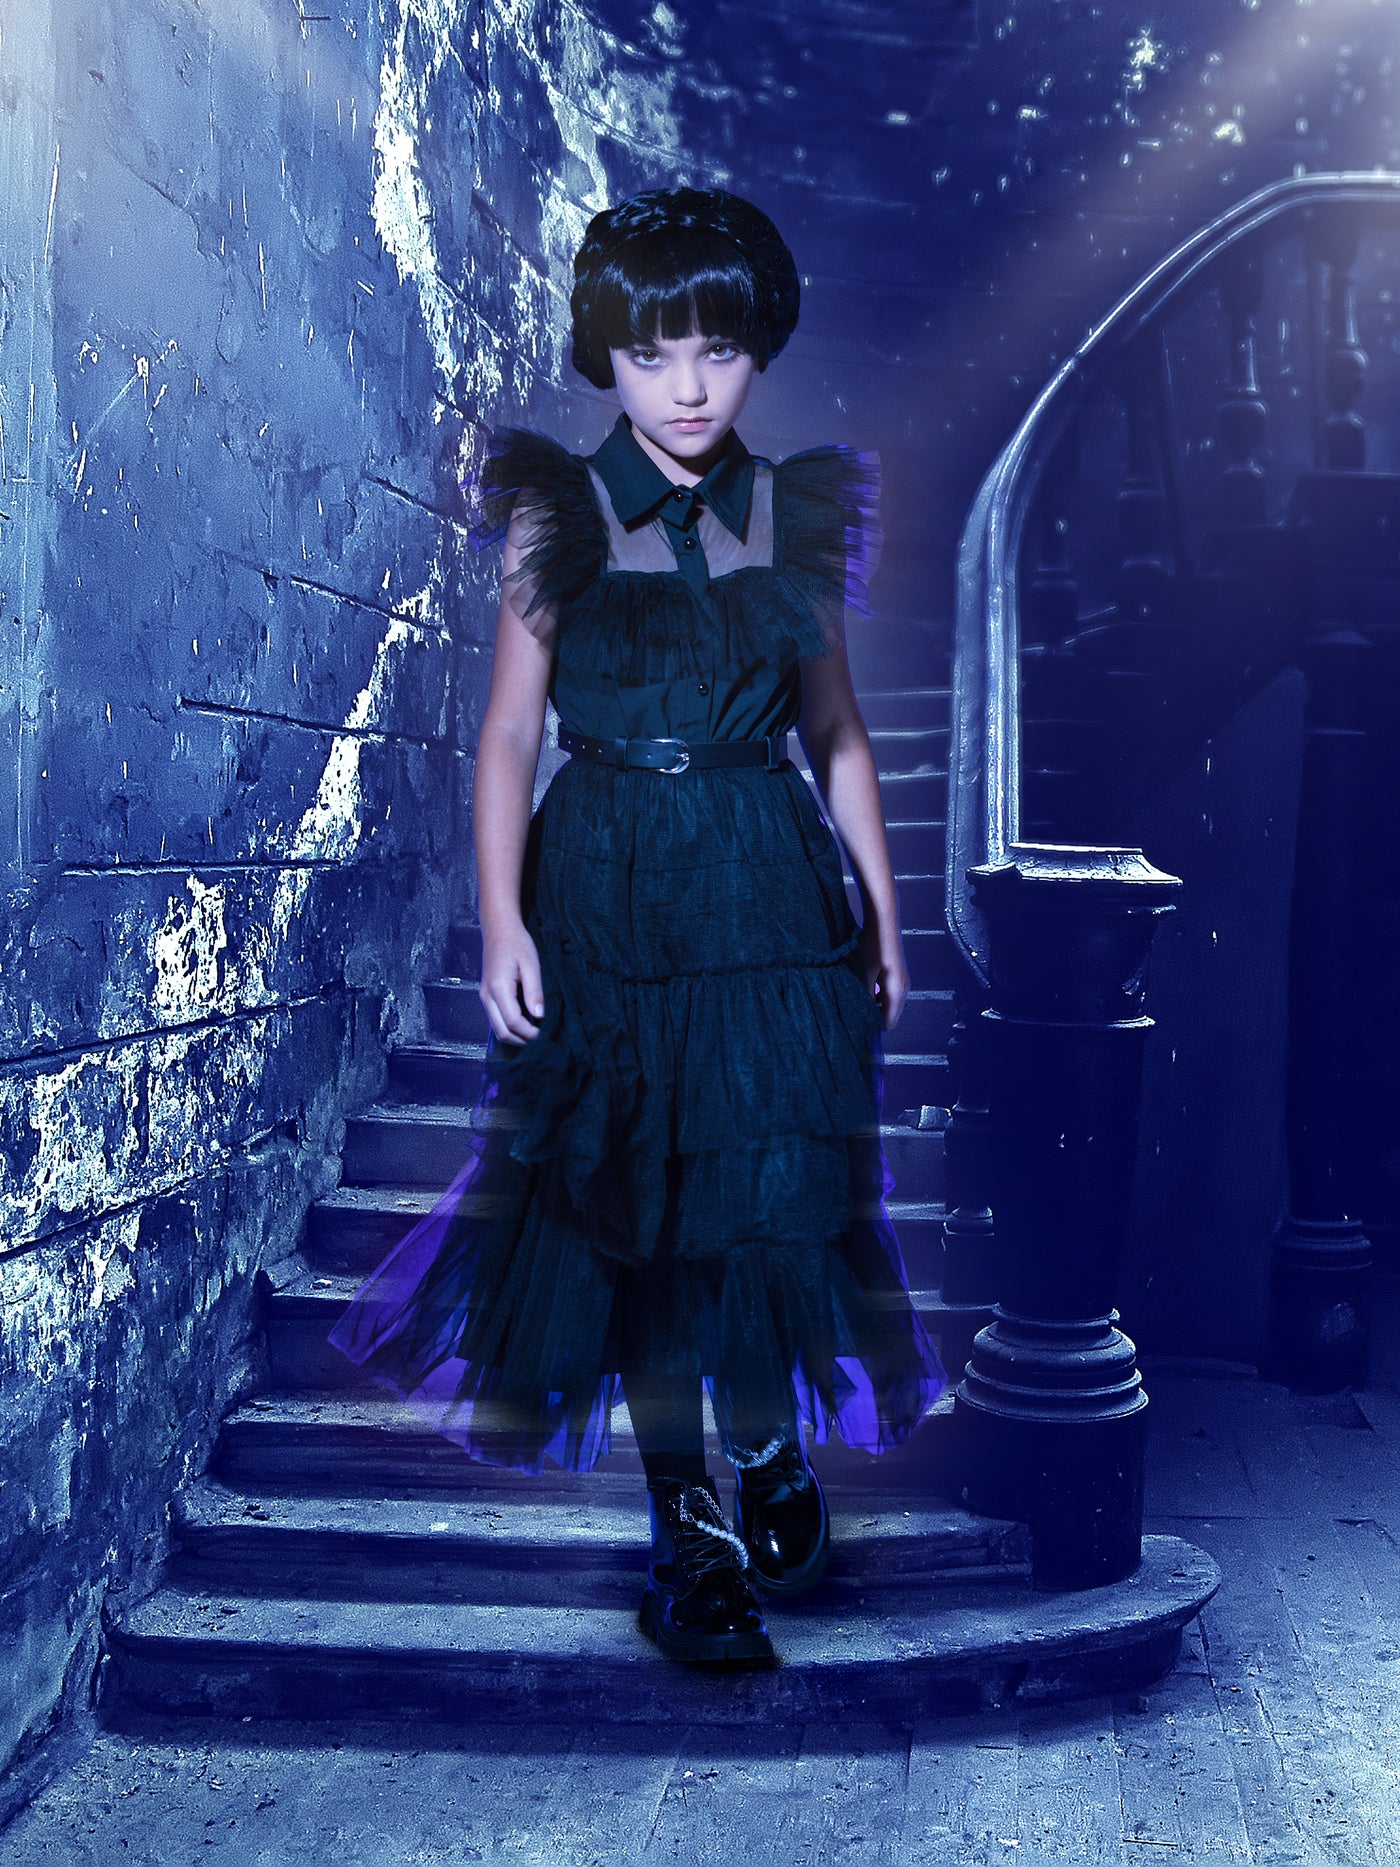 Girls Halloween Costumes | Prom Dance Wednesday Black Tulle Dress – Mia ...